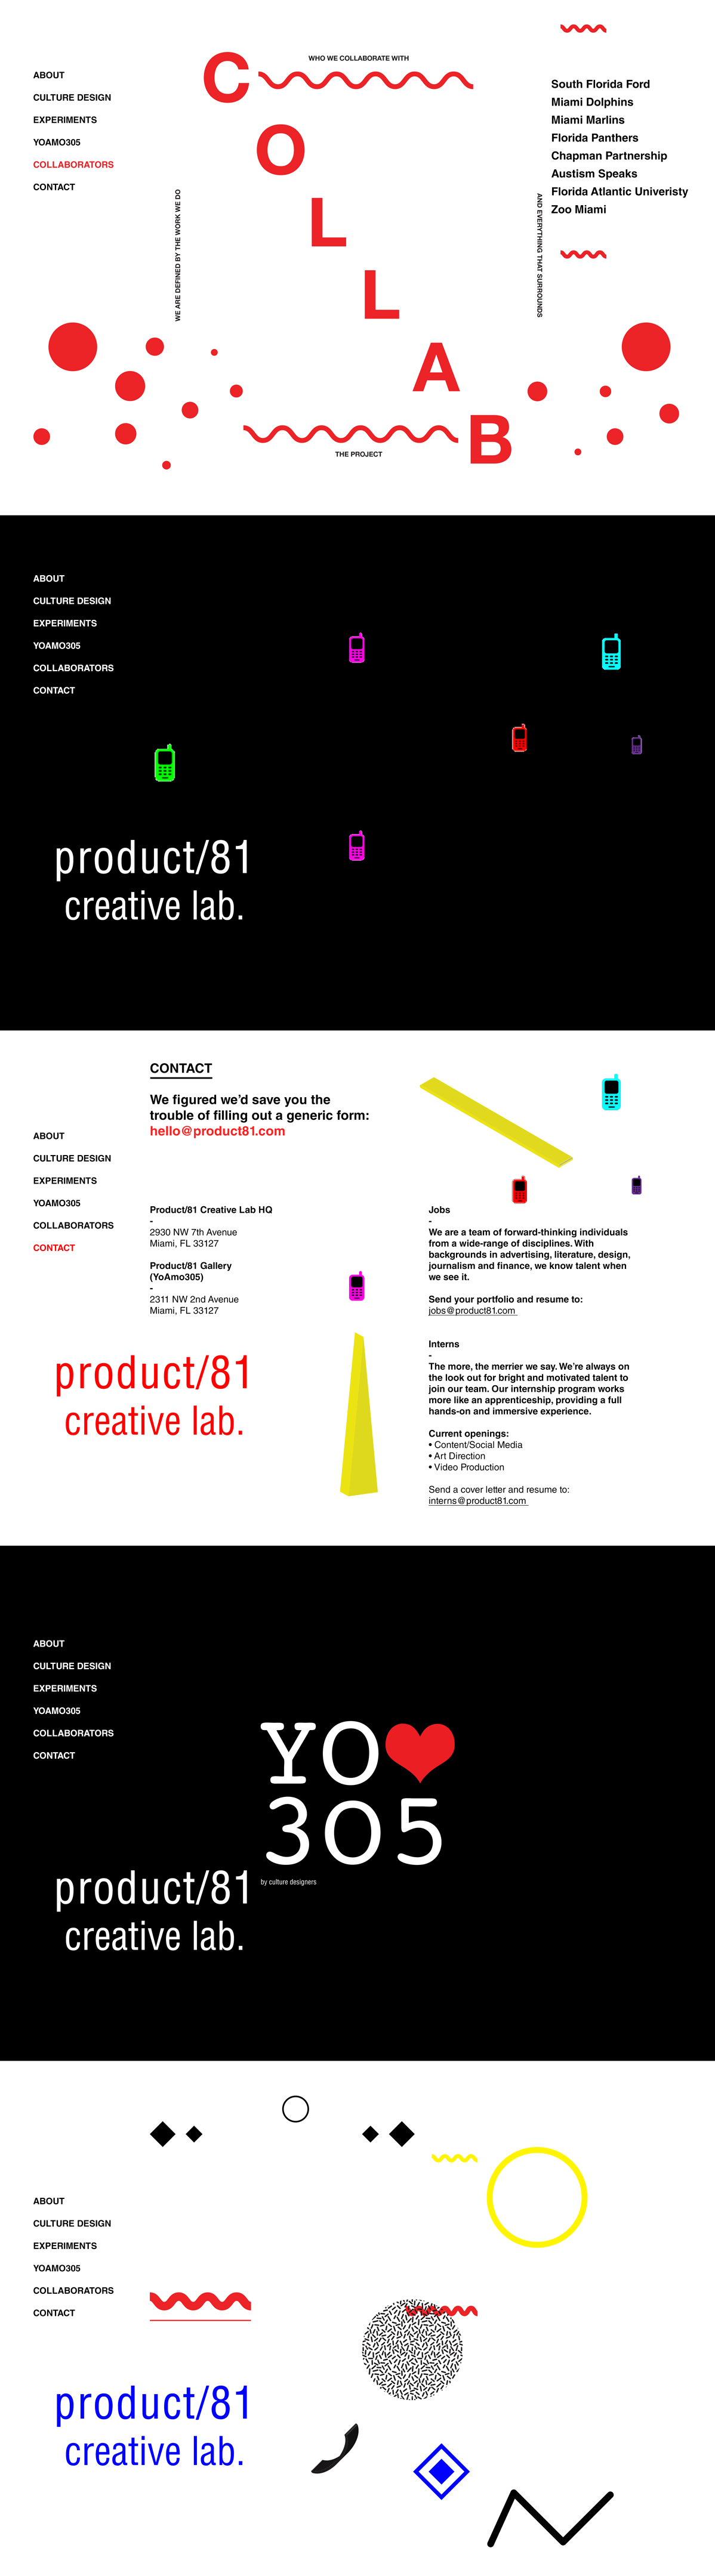 product/81 creative-lab